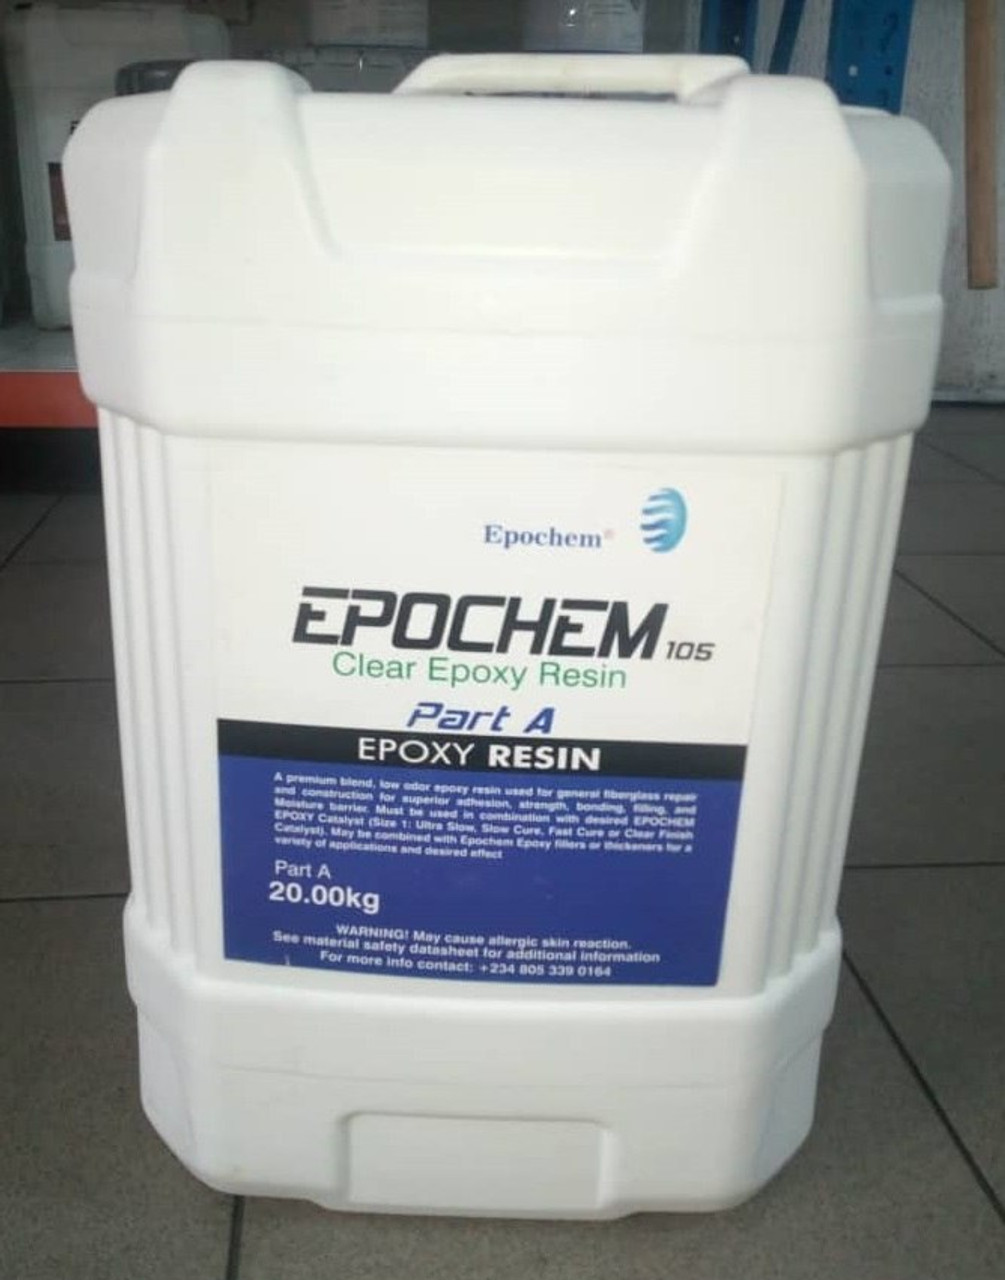 Buy Epoxy Resin Epochem 105 20kg Keg From Gz Industrial Supplies